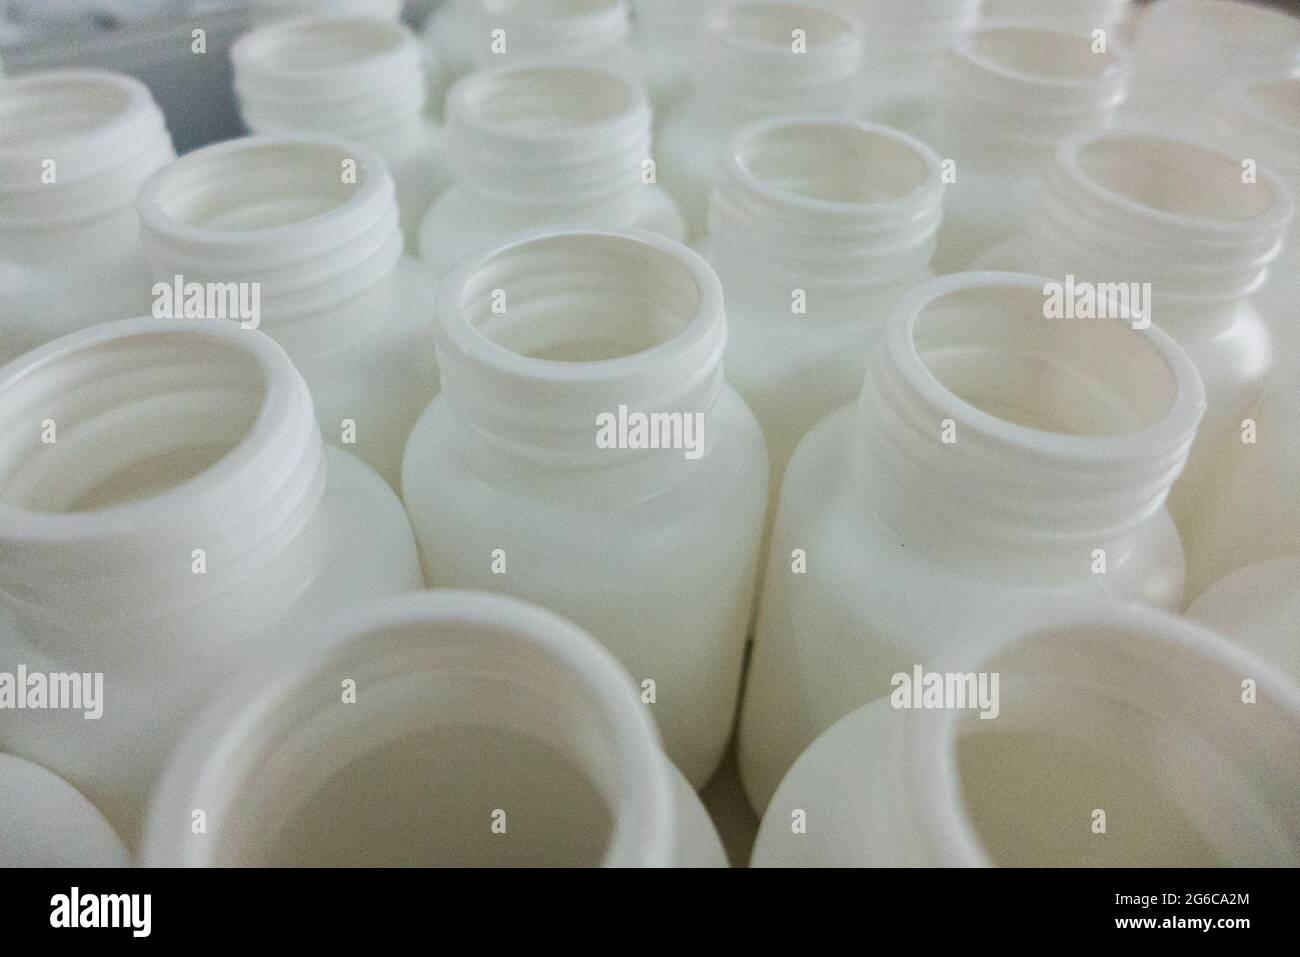 Empty white medical plastic bottles for production Stock Photo